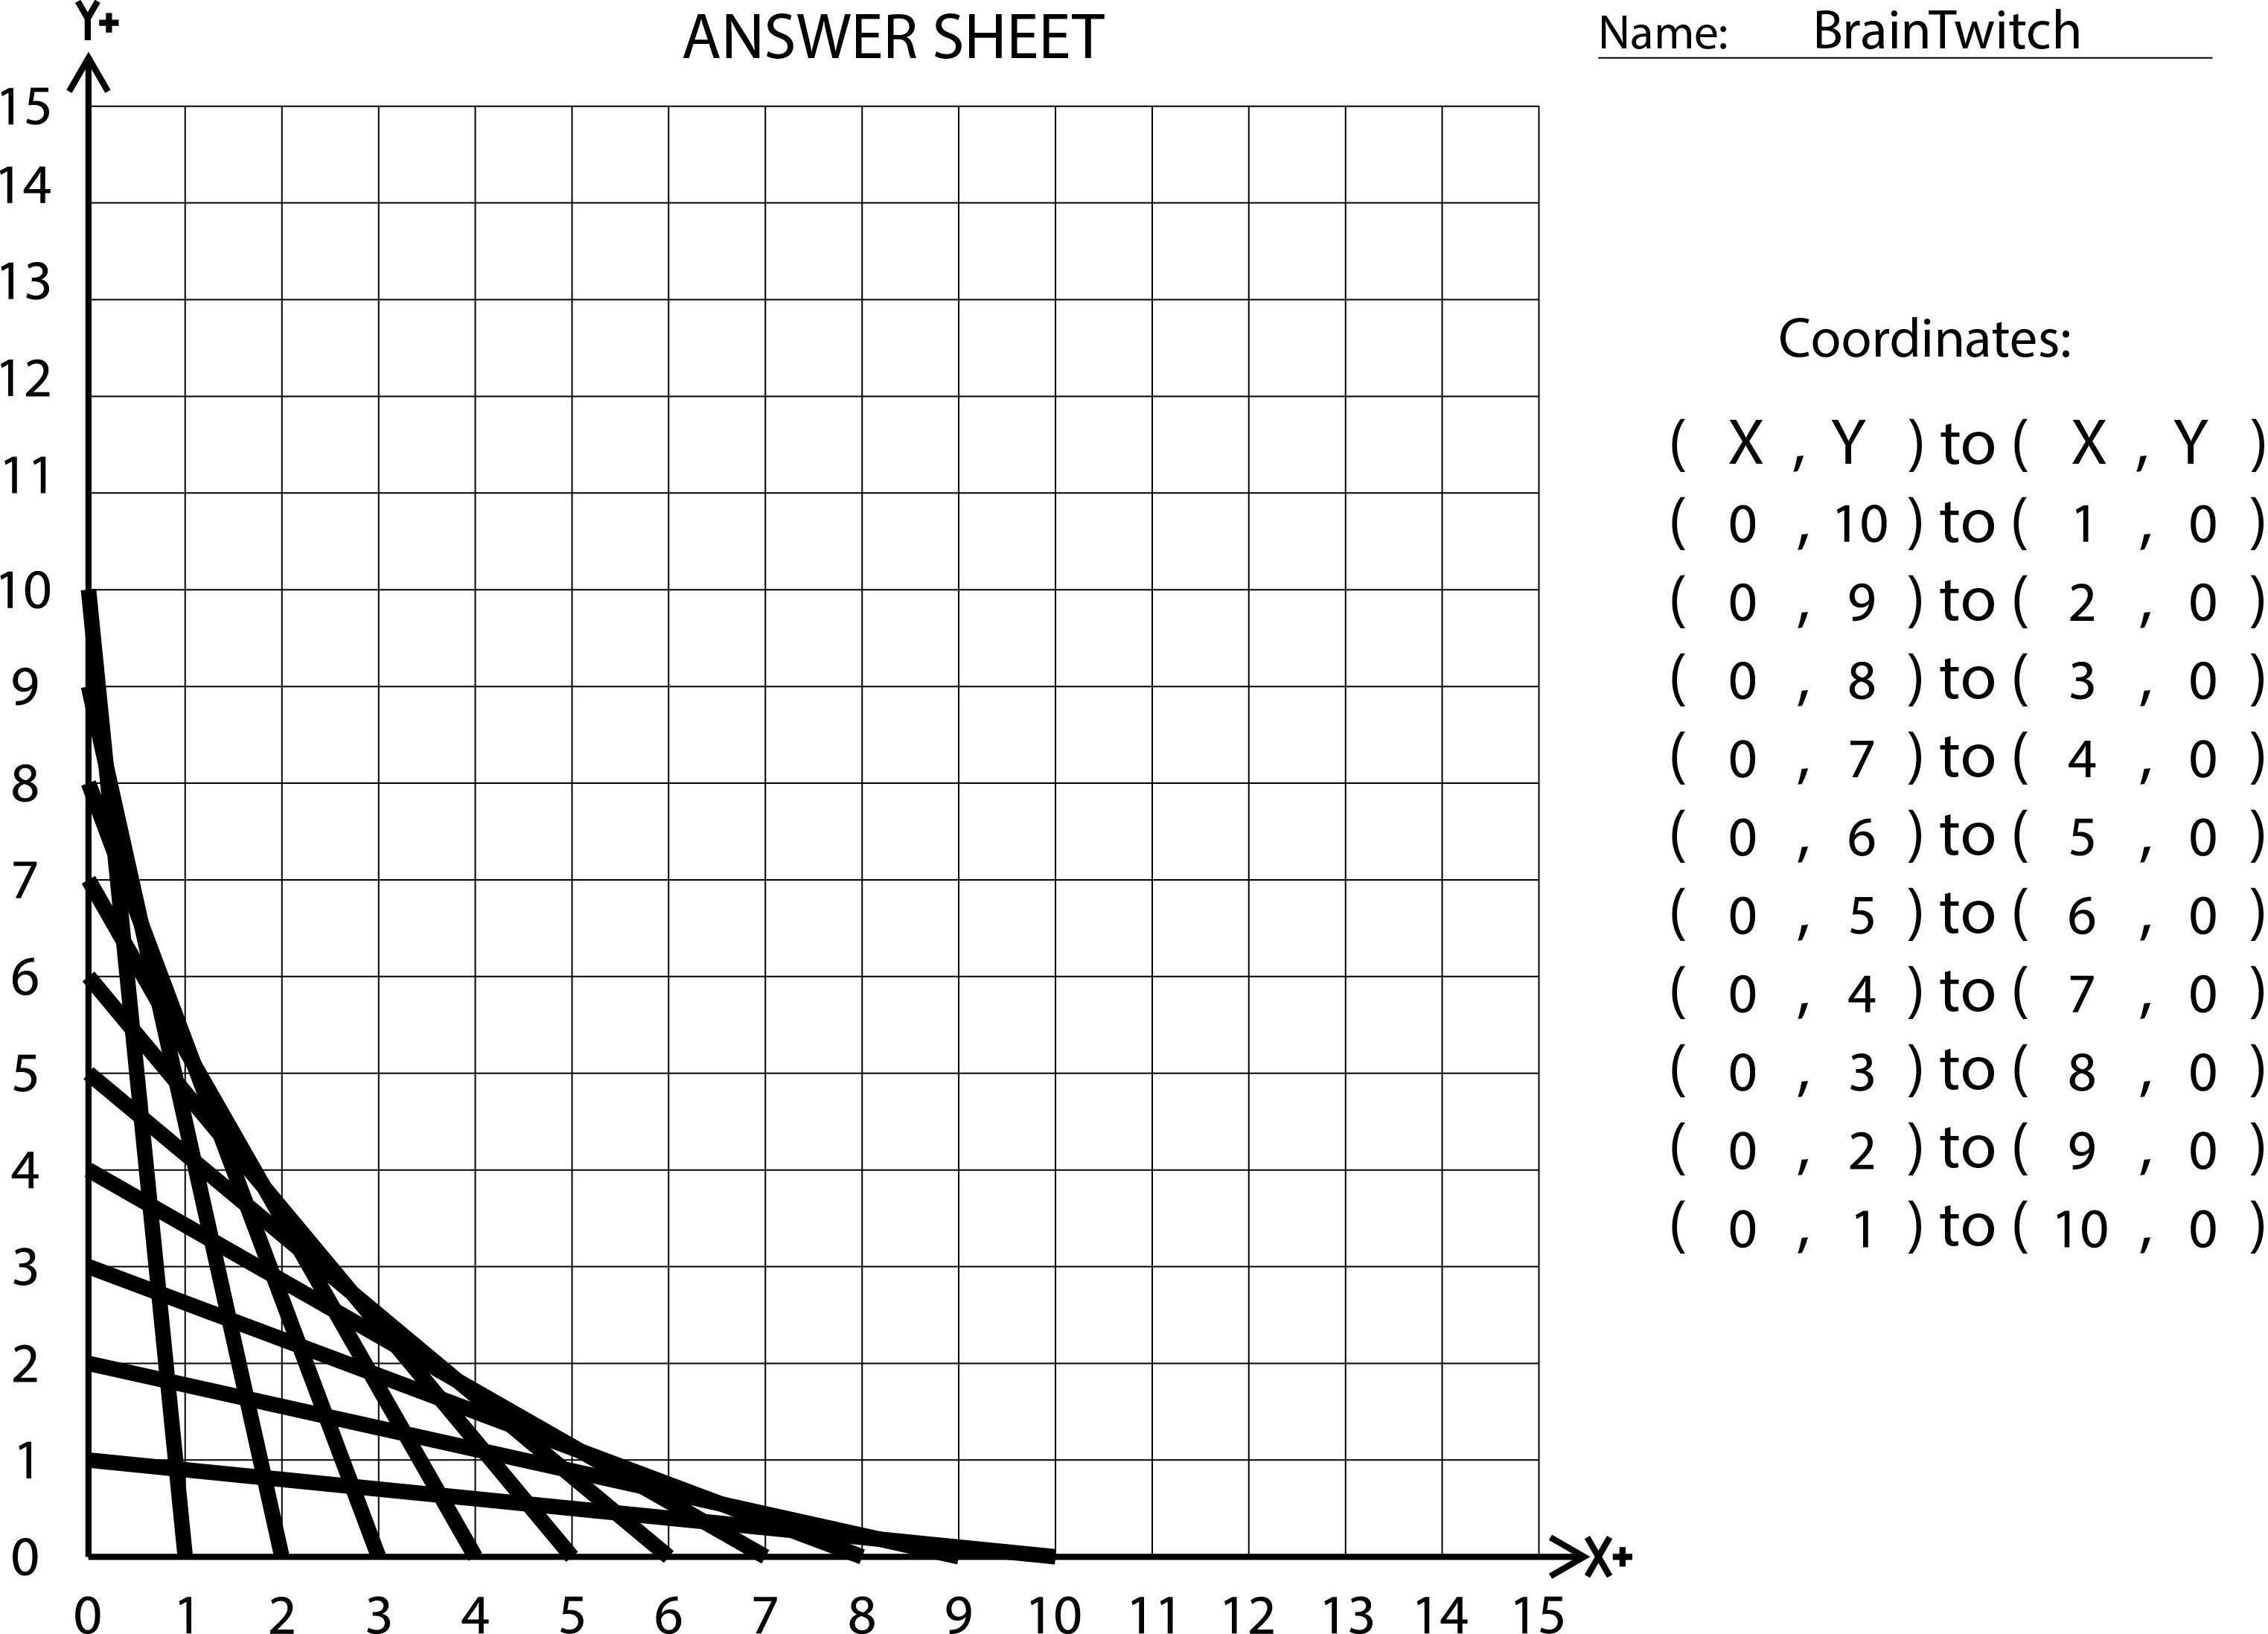 single quadrant WS coordinates ANSWER SHEET.jpg